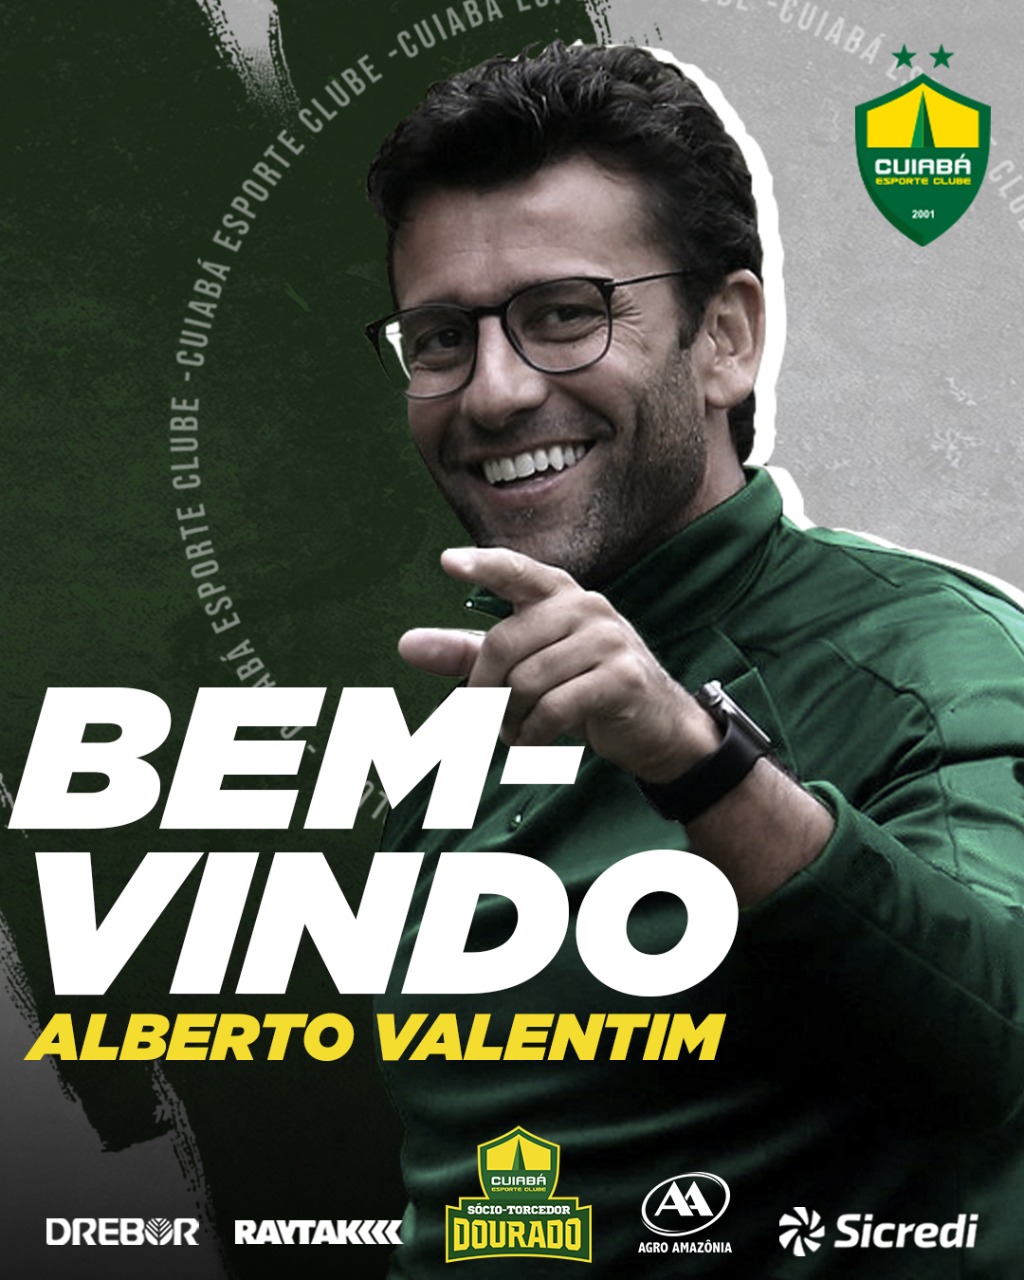 Alberto Valentim - Cuiabá